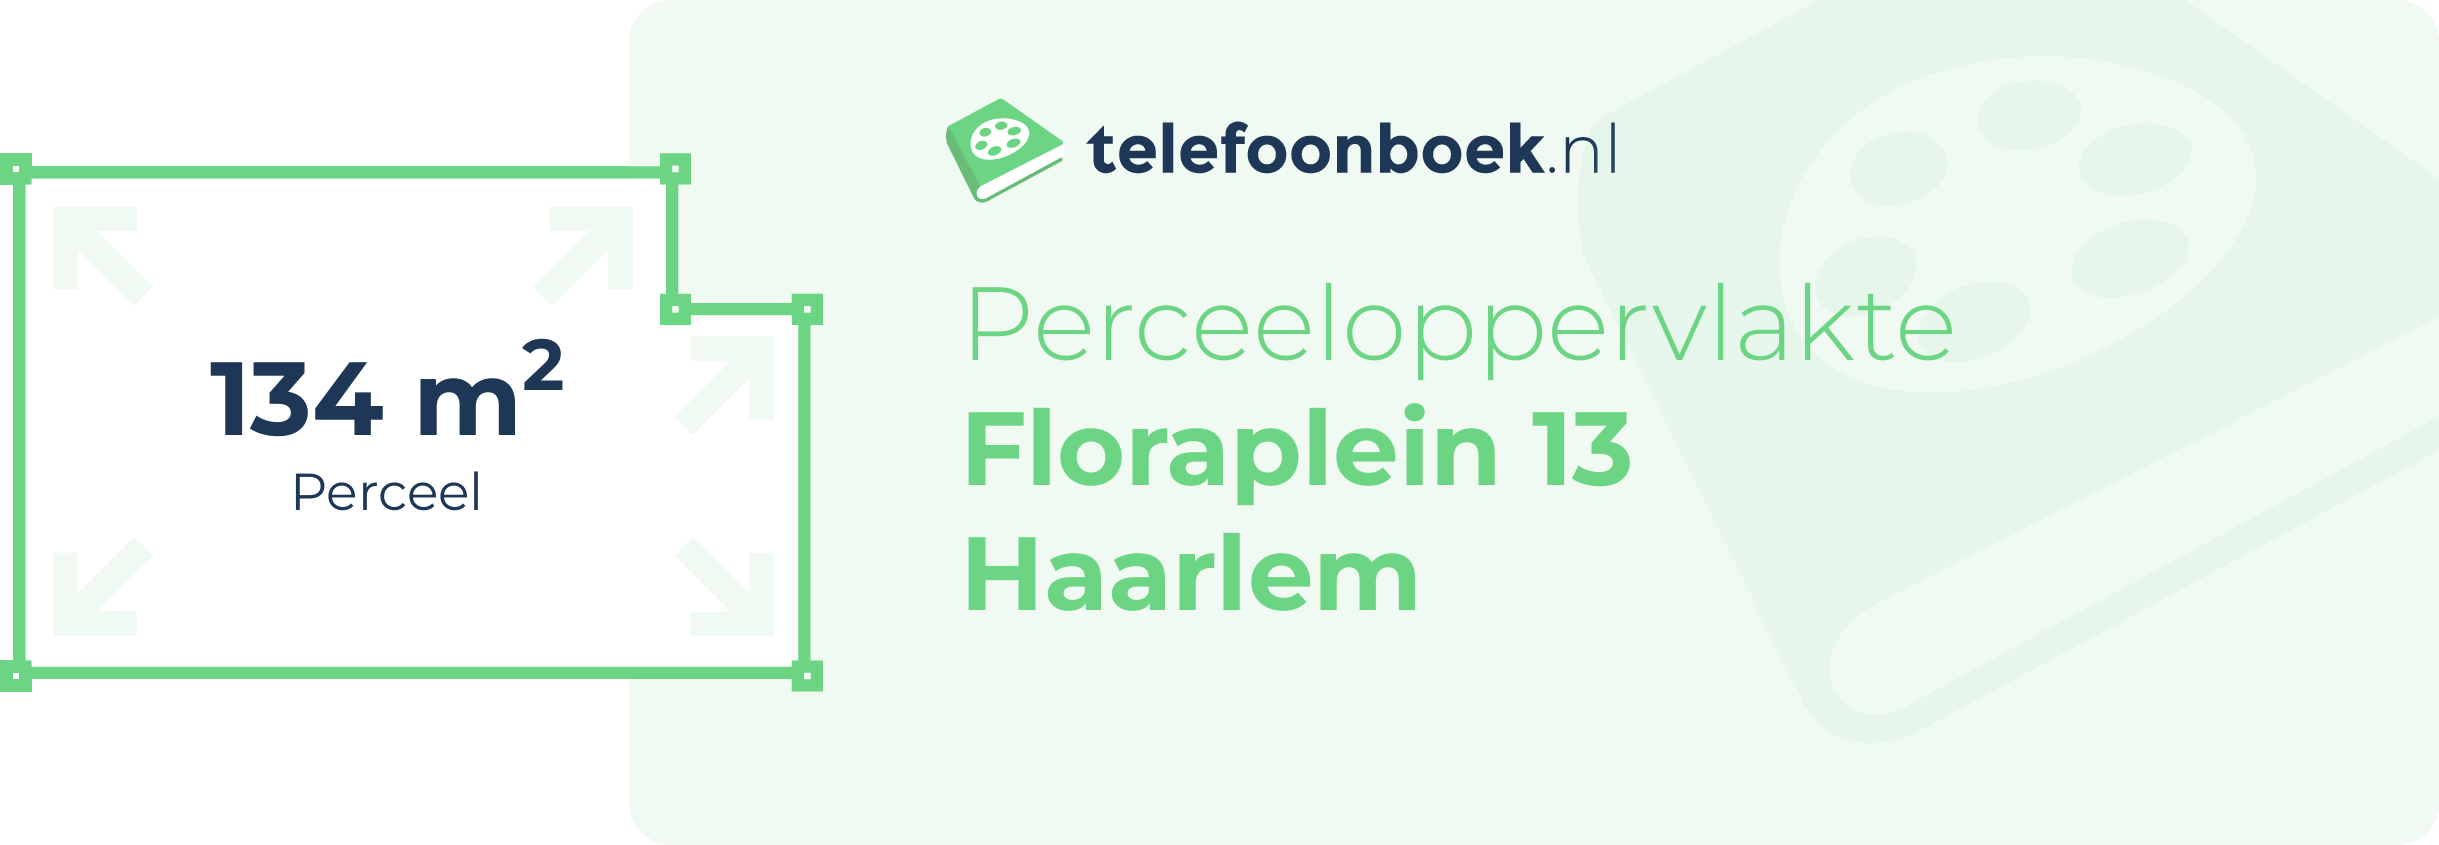 Perceeloppervlakte Floraplein 13 Haarlem